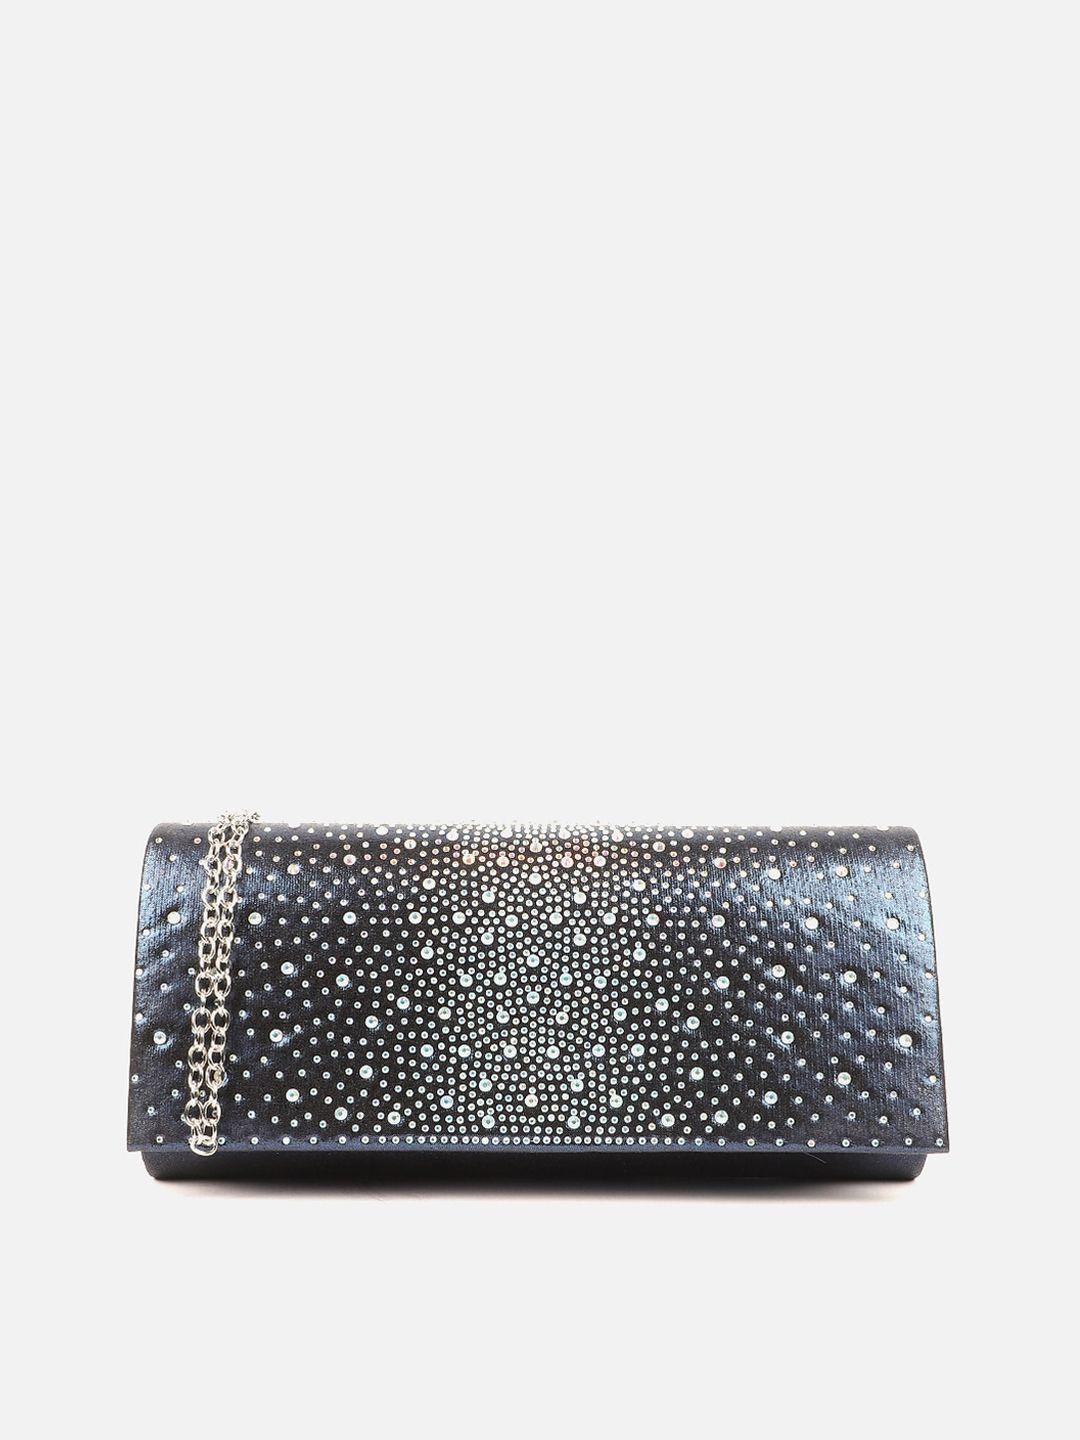 carlton london self design purse with detachable sling